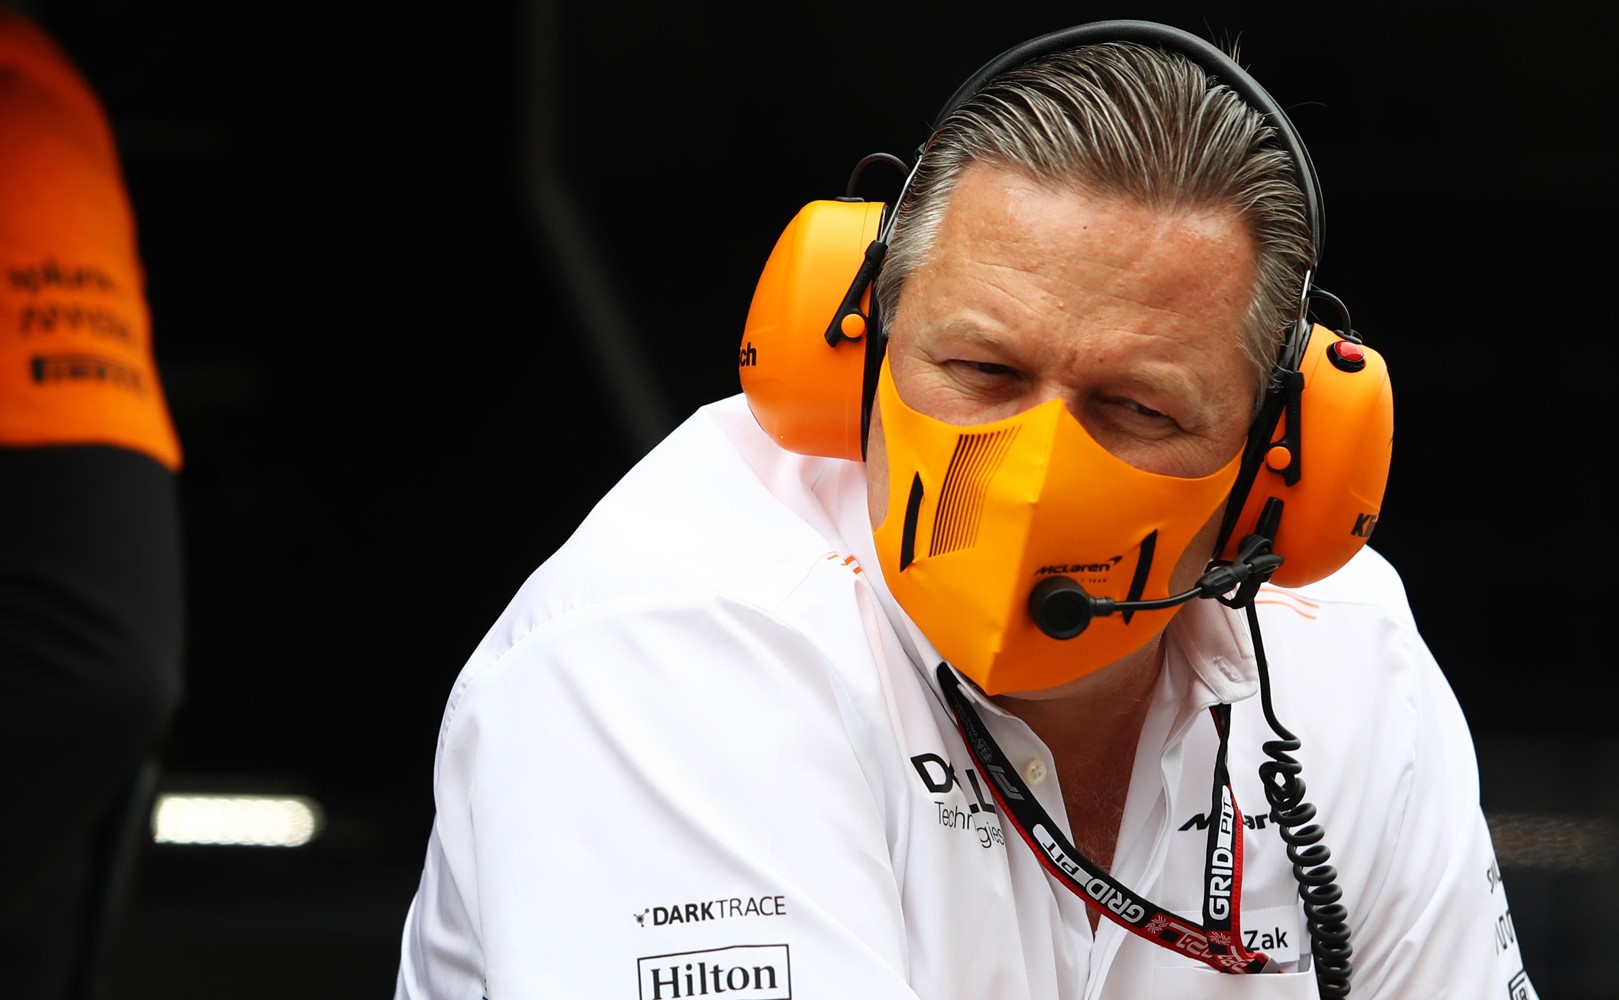 McLaren backs Andretti's F1 bid, claims rival teams are 'very selfish'